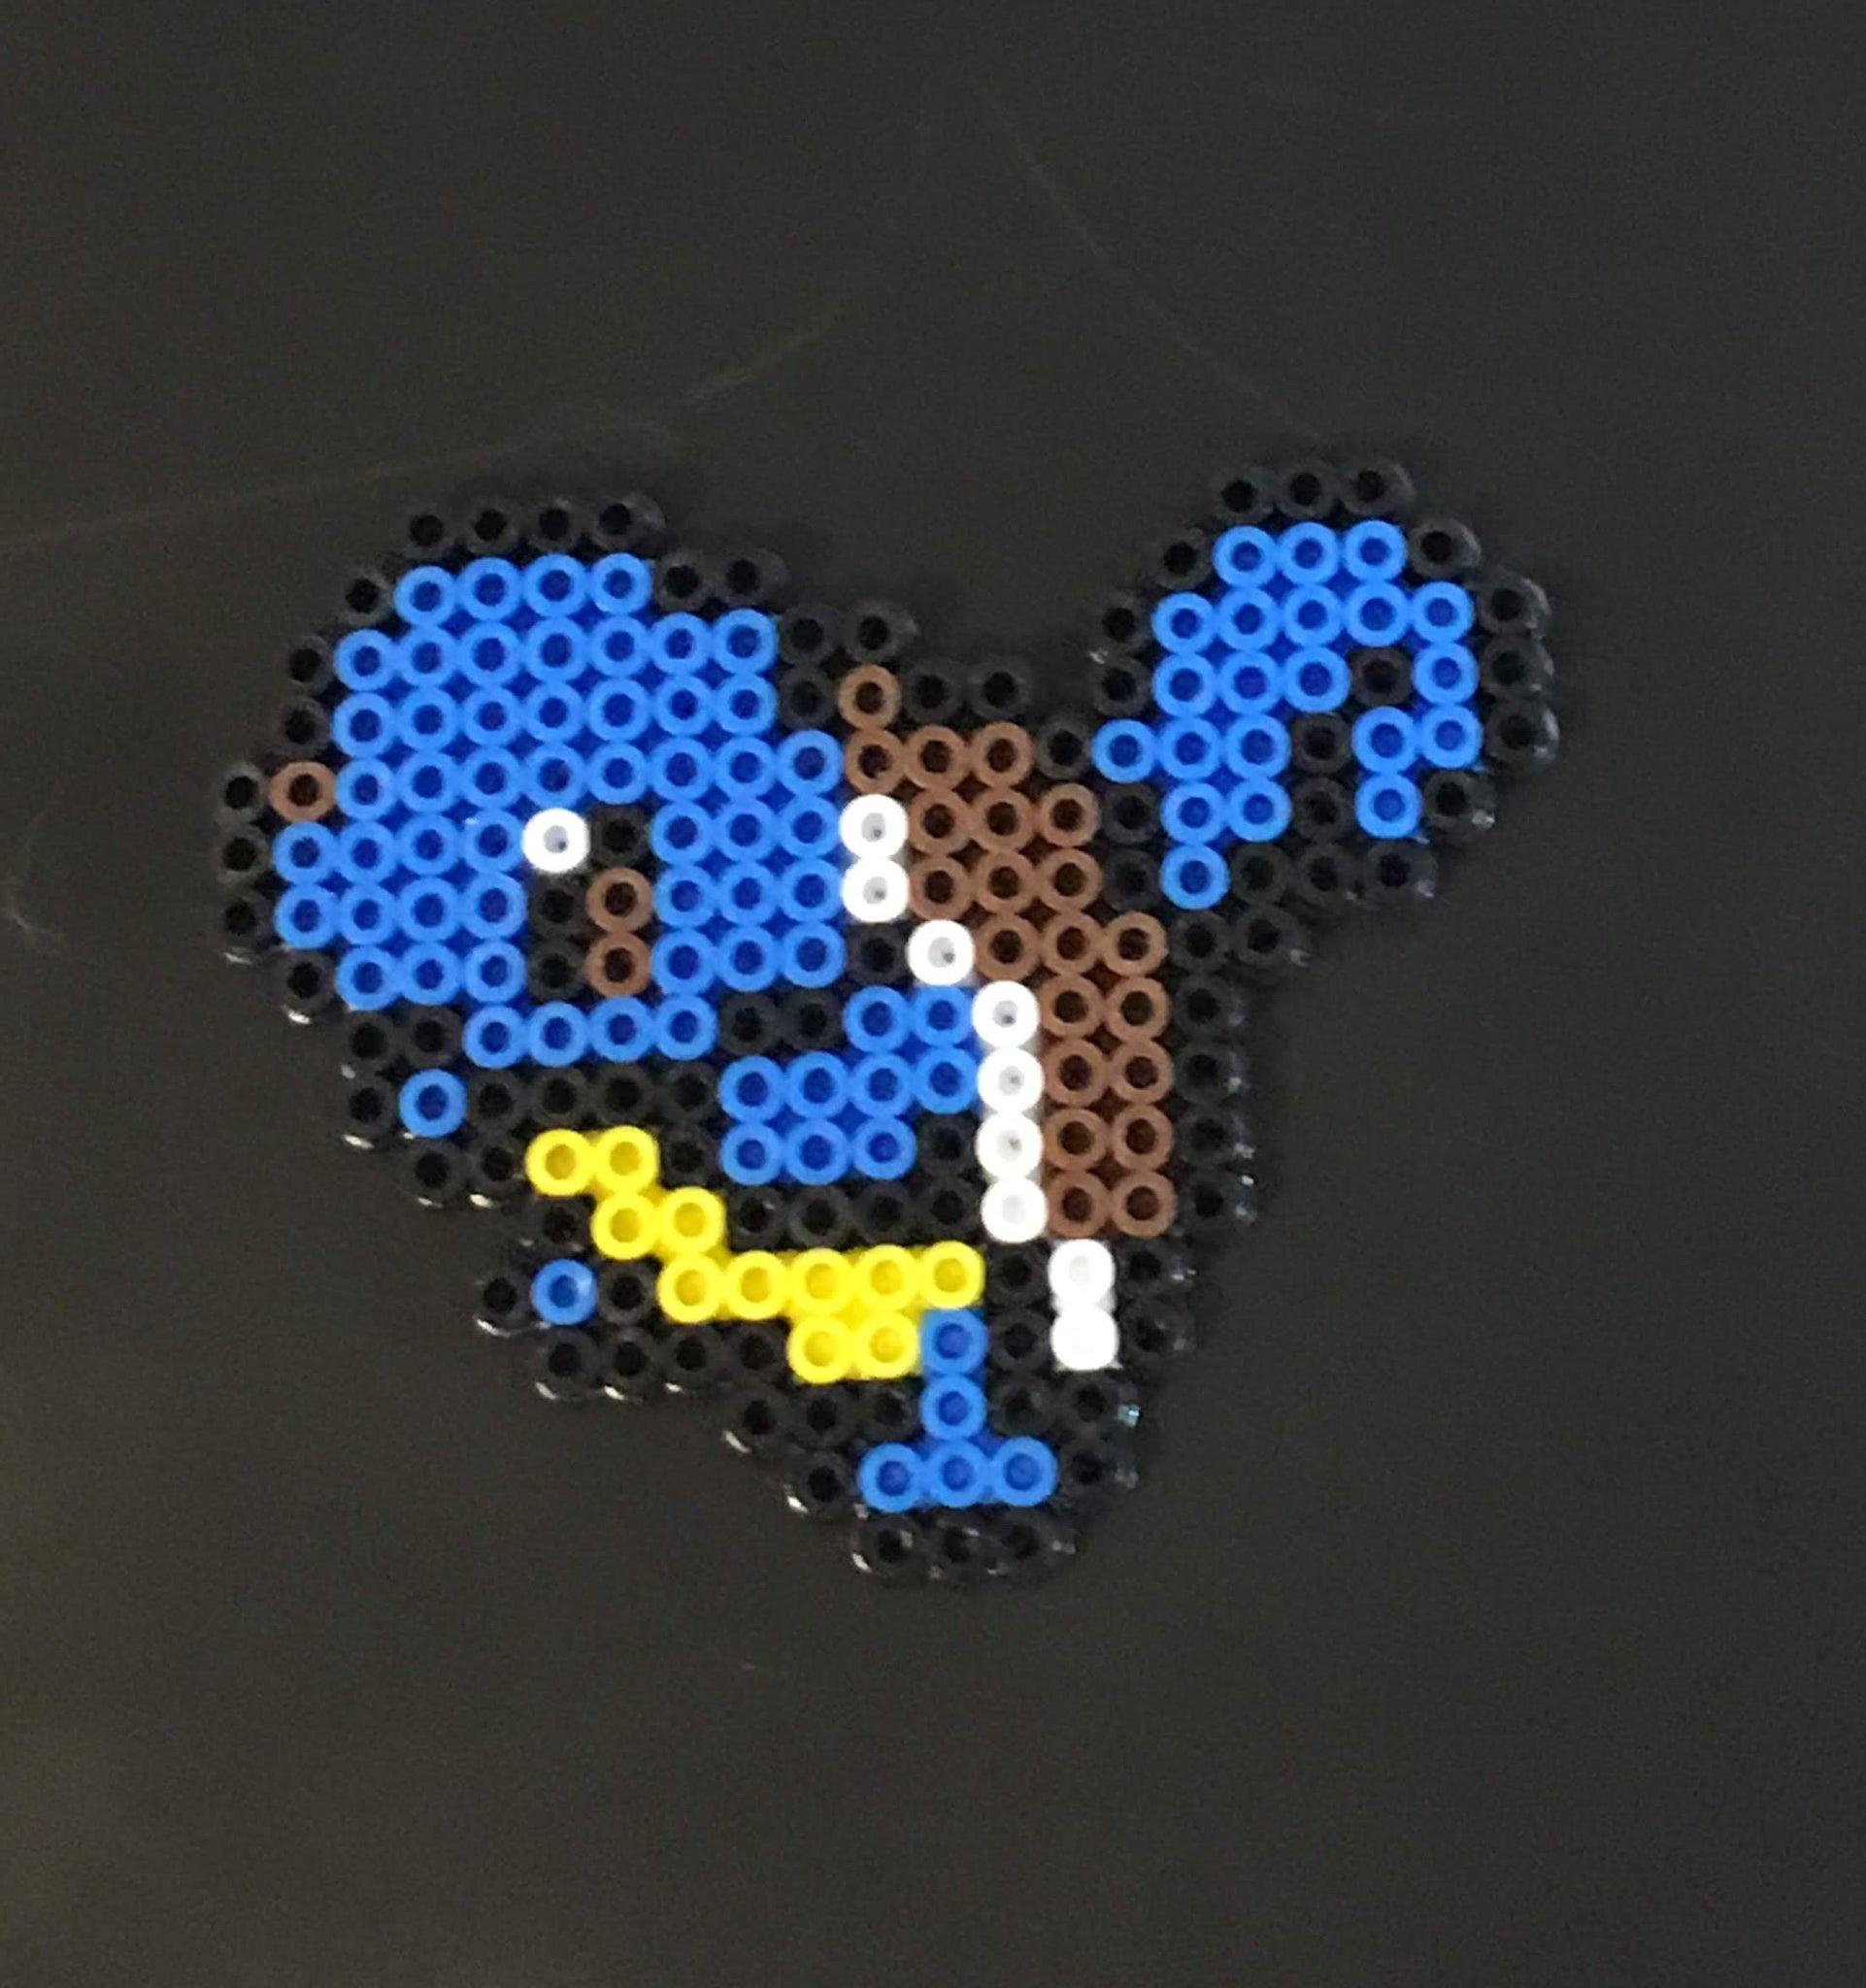 pokemon pixel art squirtle